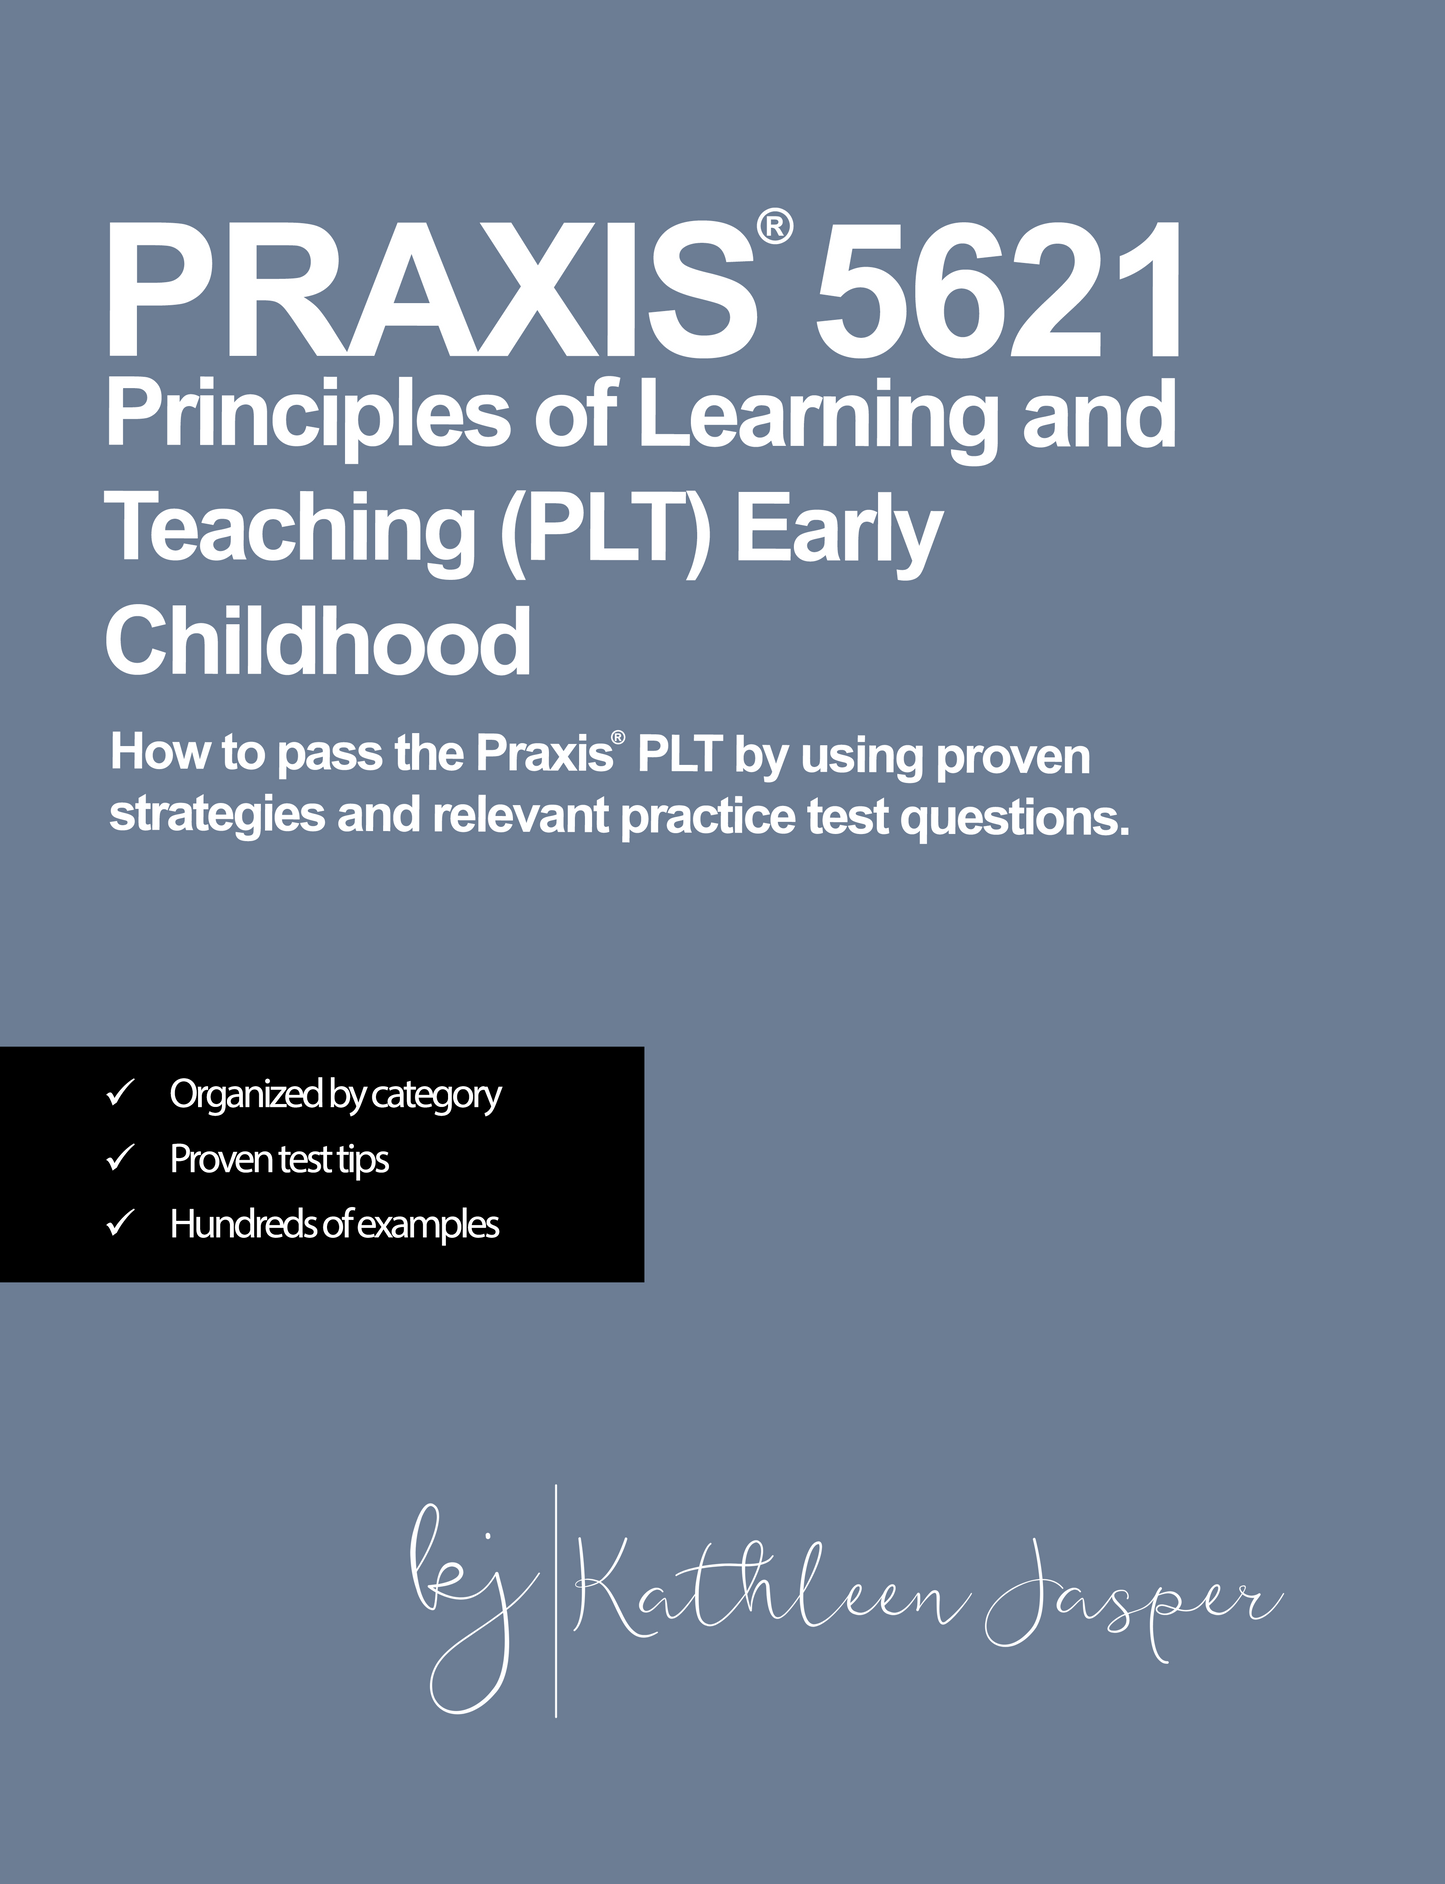 Praxis PLT Early Childhood (5621) Digital Study Guide